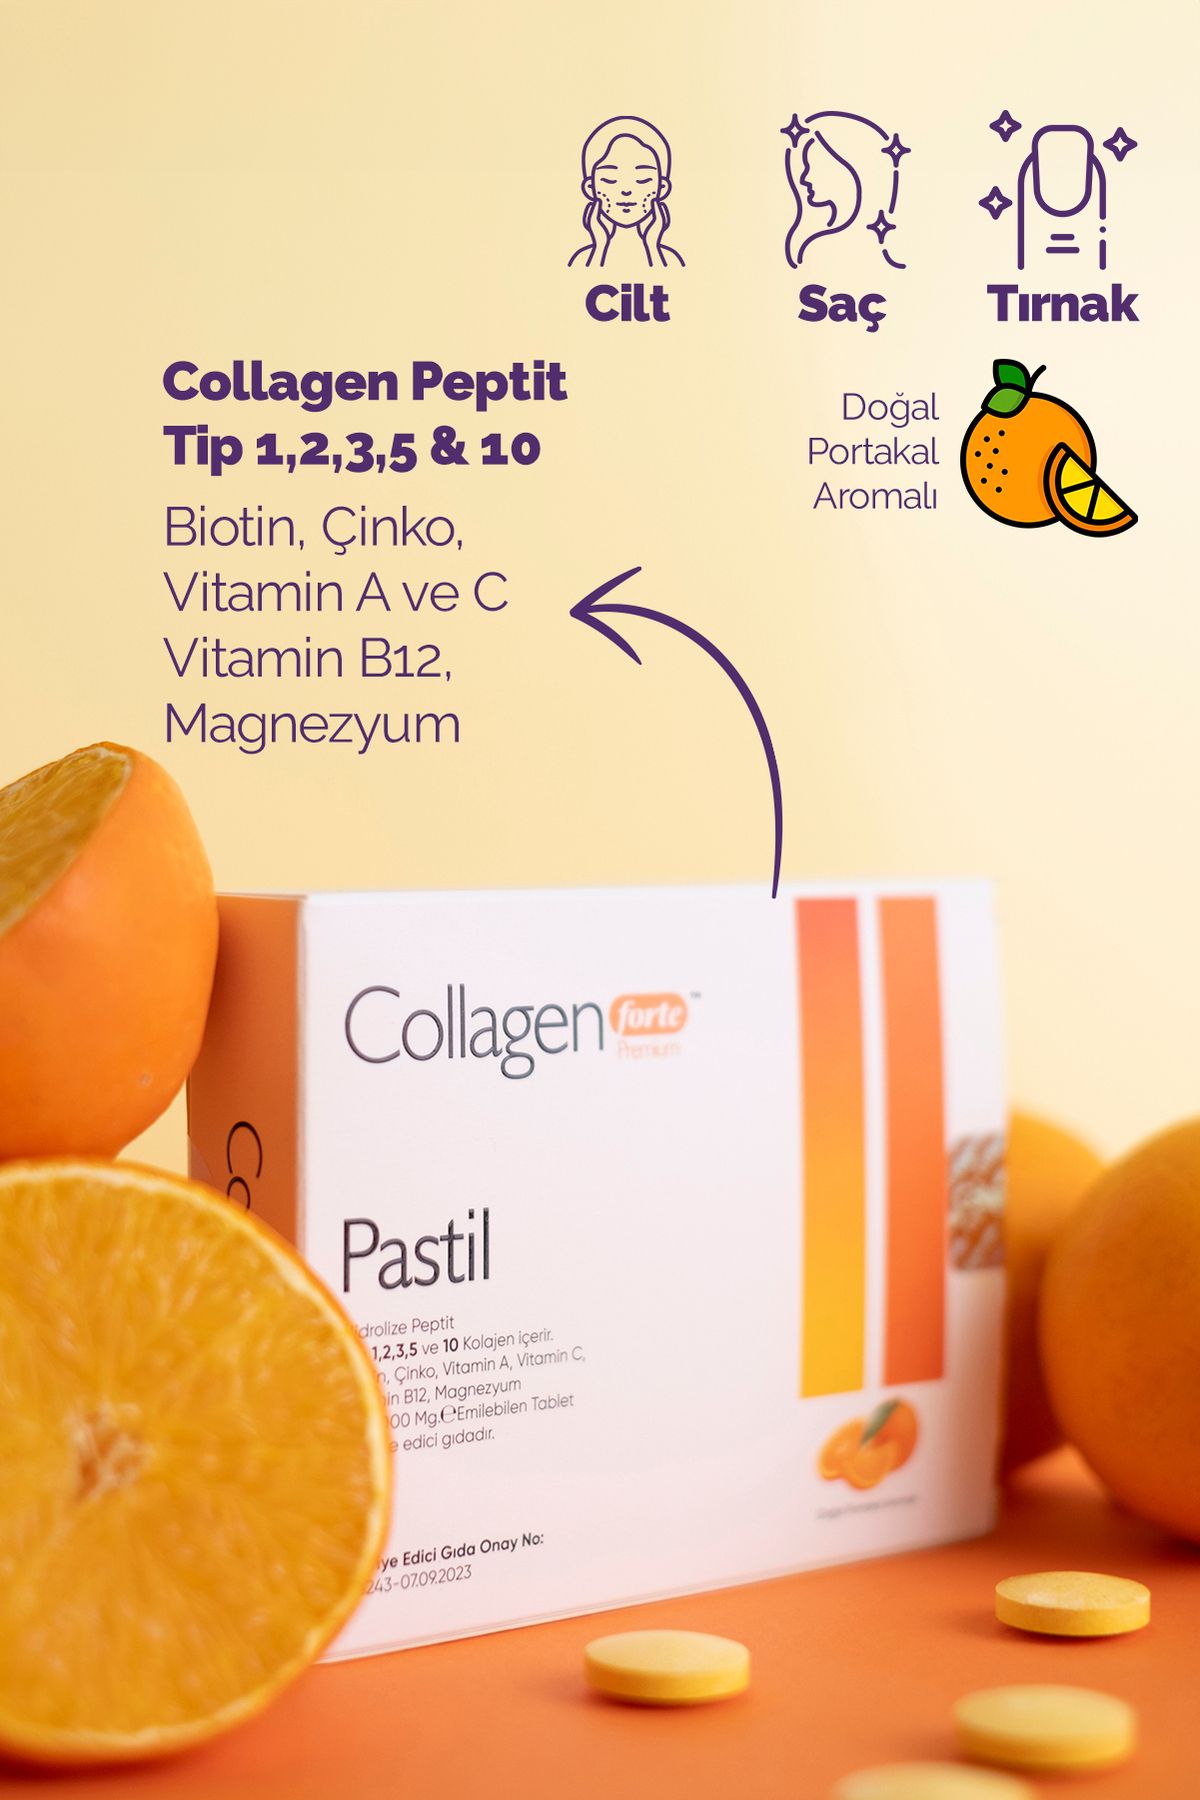 Collagen Forte Platinum 5 Tip Kolajen 2000mg X 30 Emilebilen Tablet, Biotin, Vitamin A, C, B12, Magnezyum, Portakal Aromalı